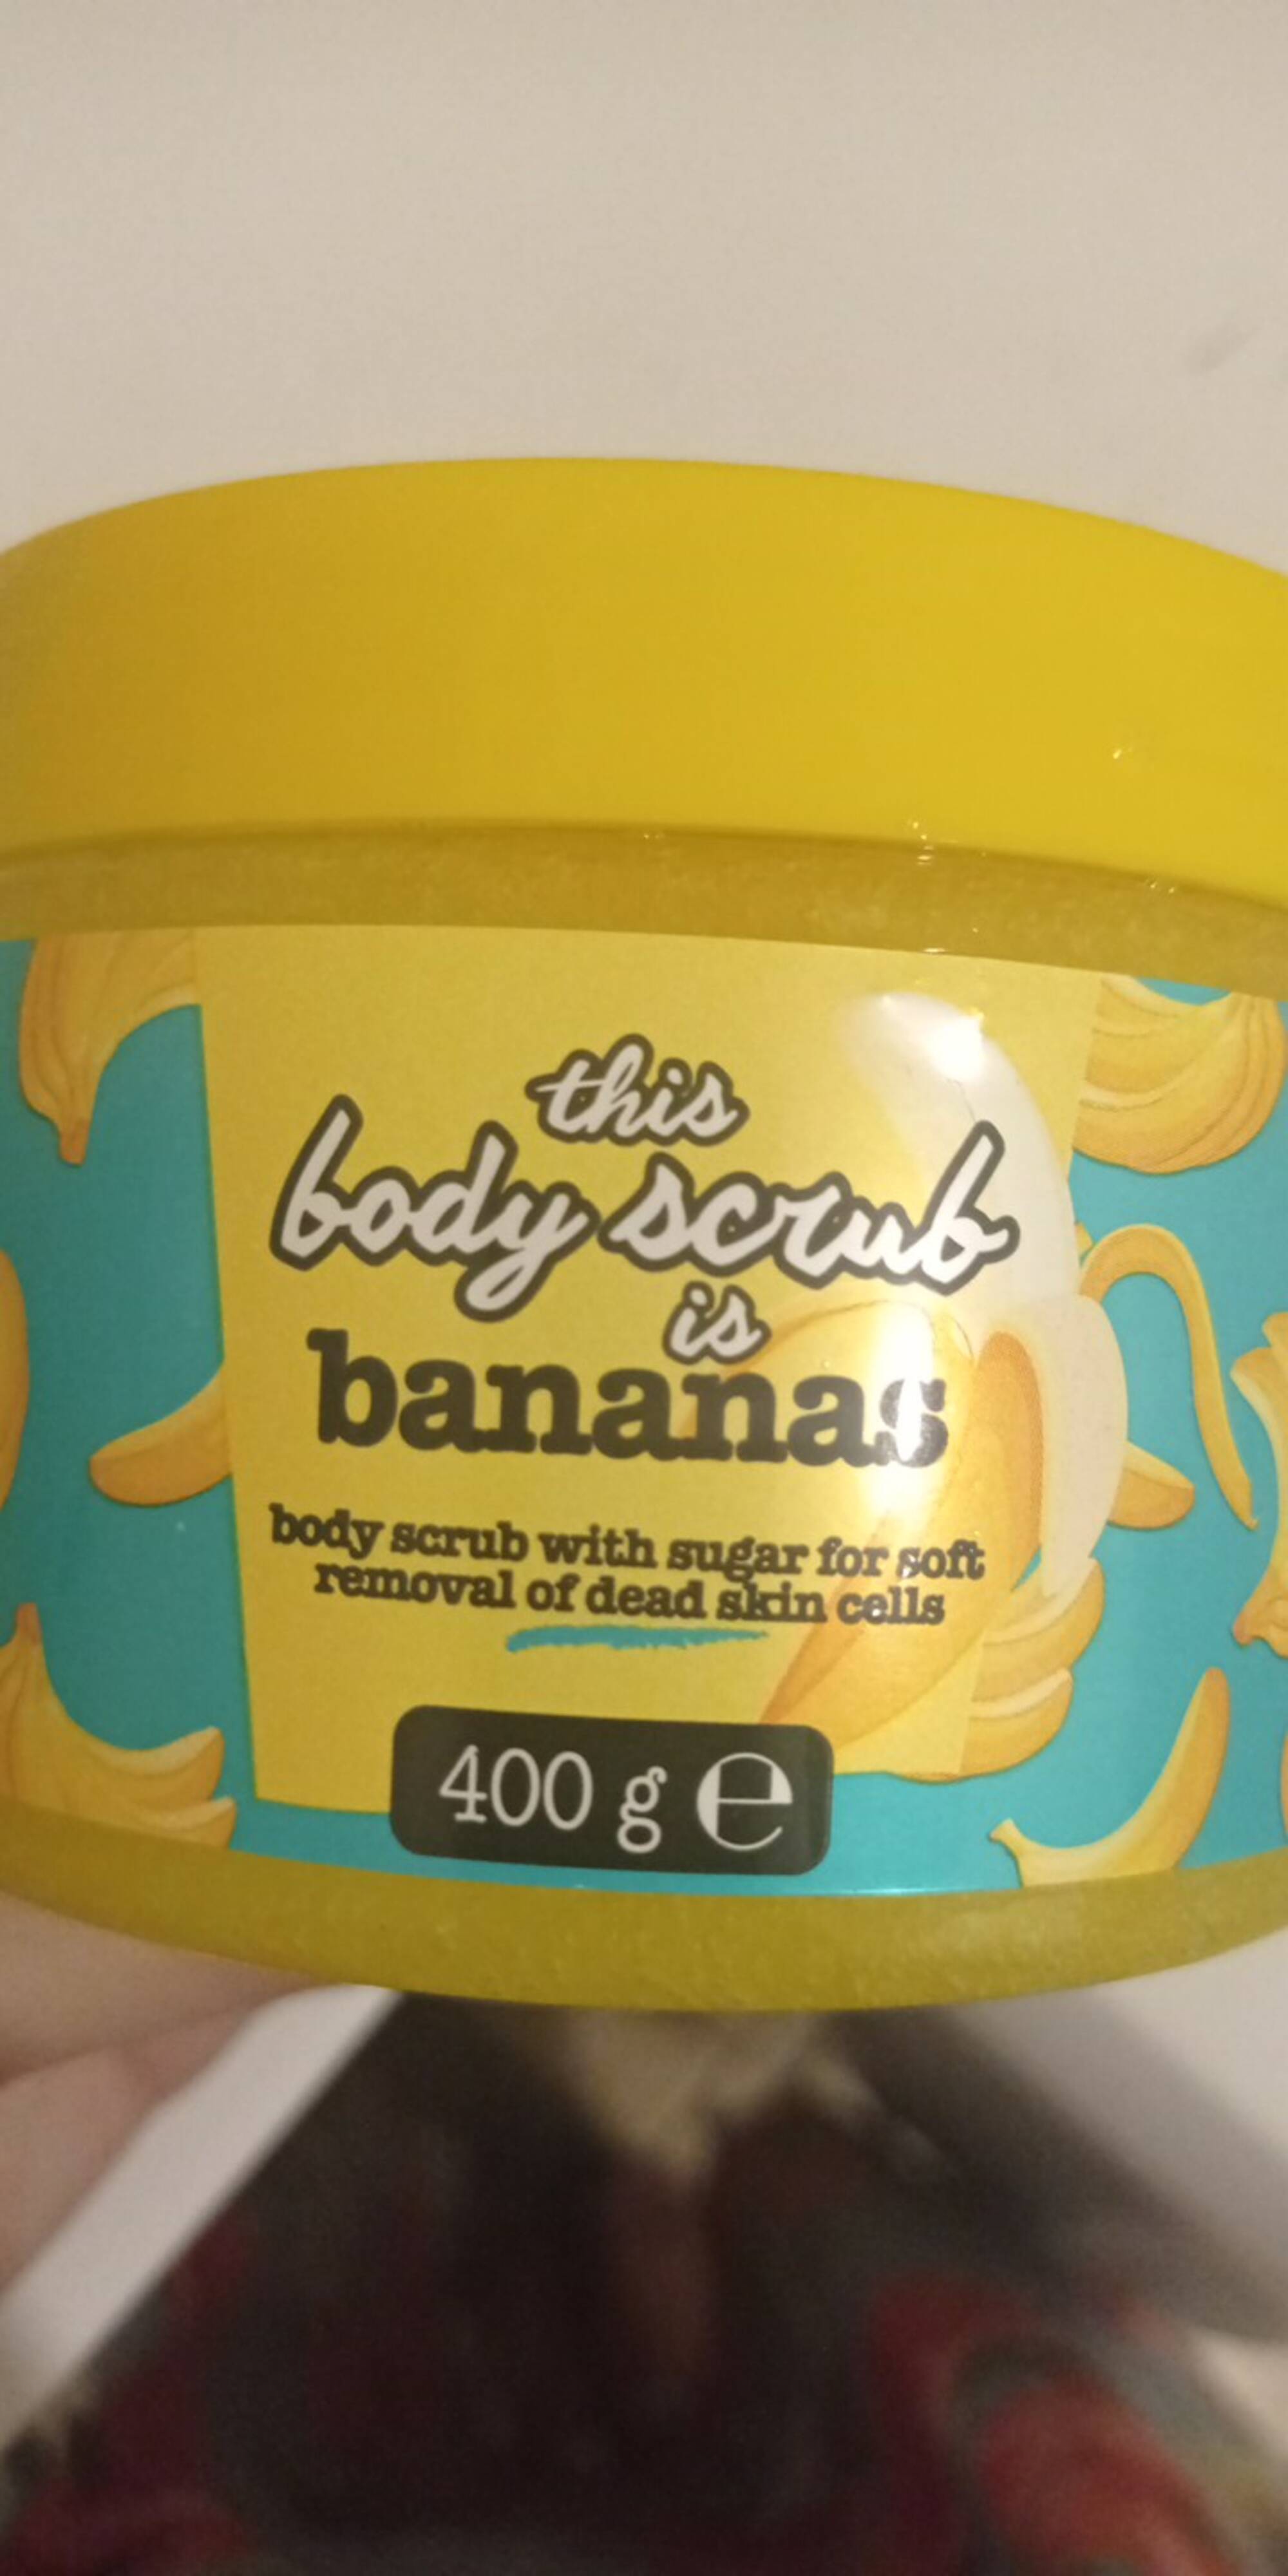 MAXBRANDS - This body scrub is bananas